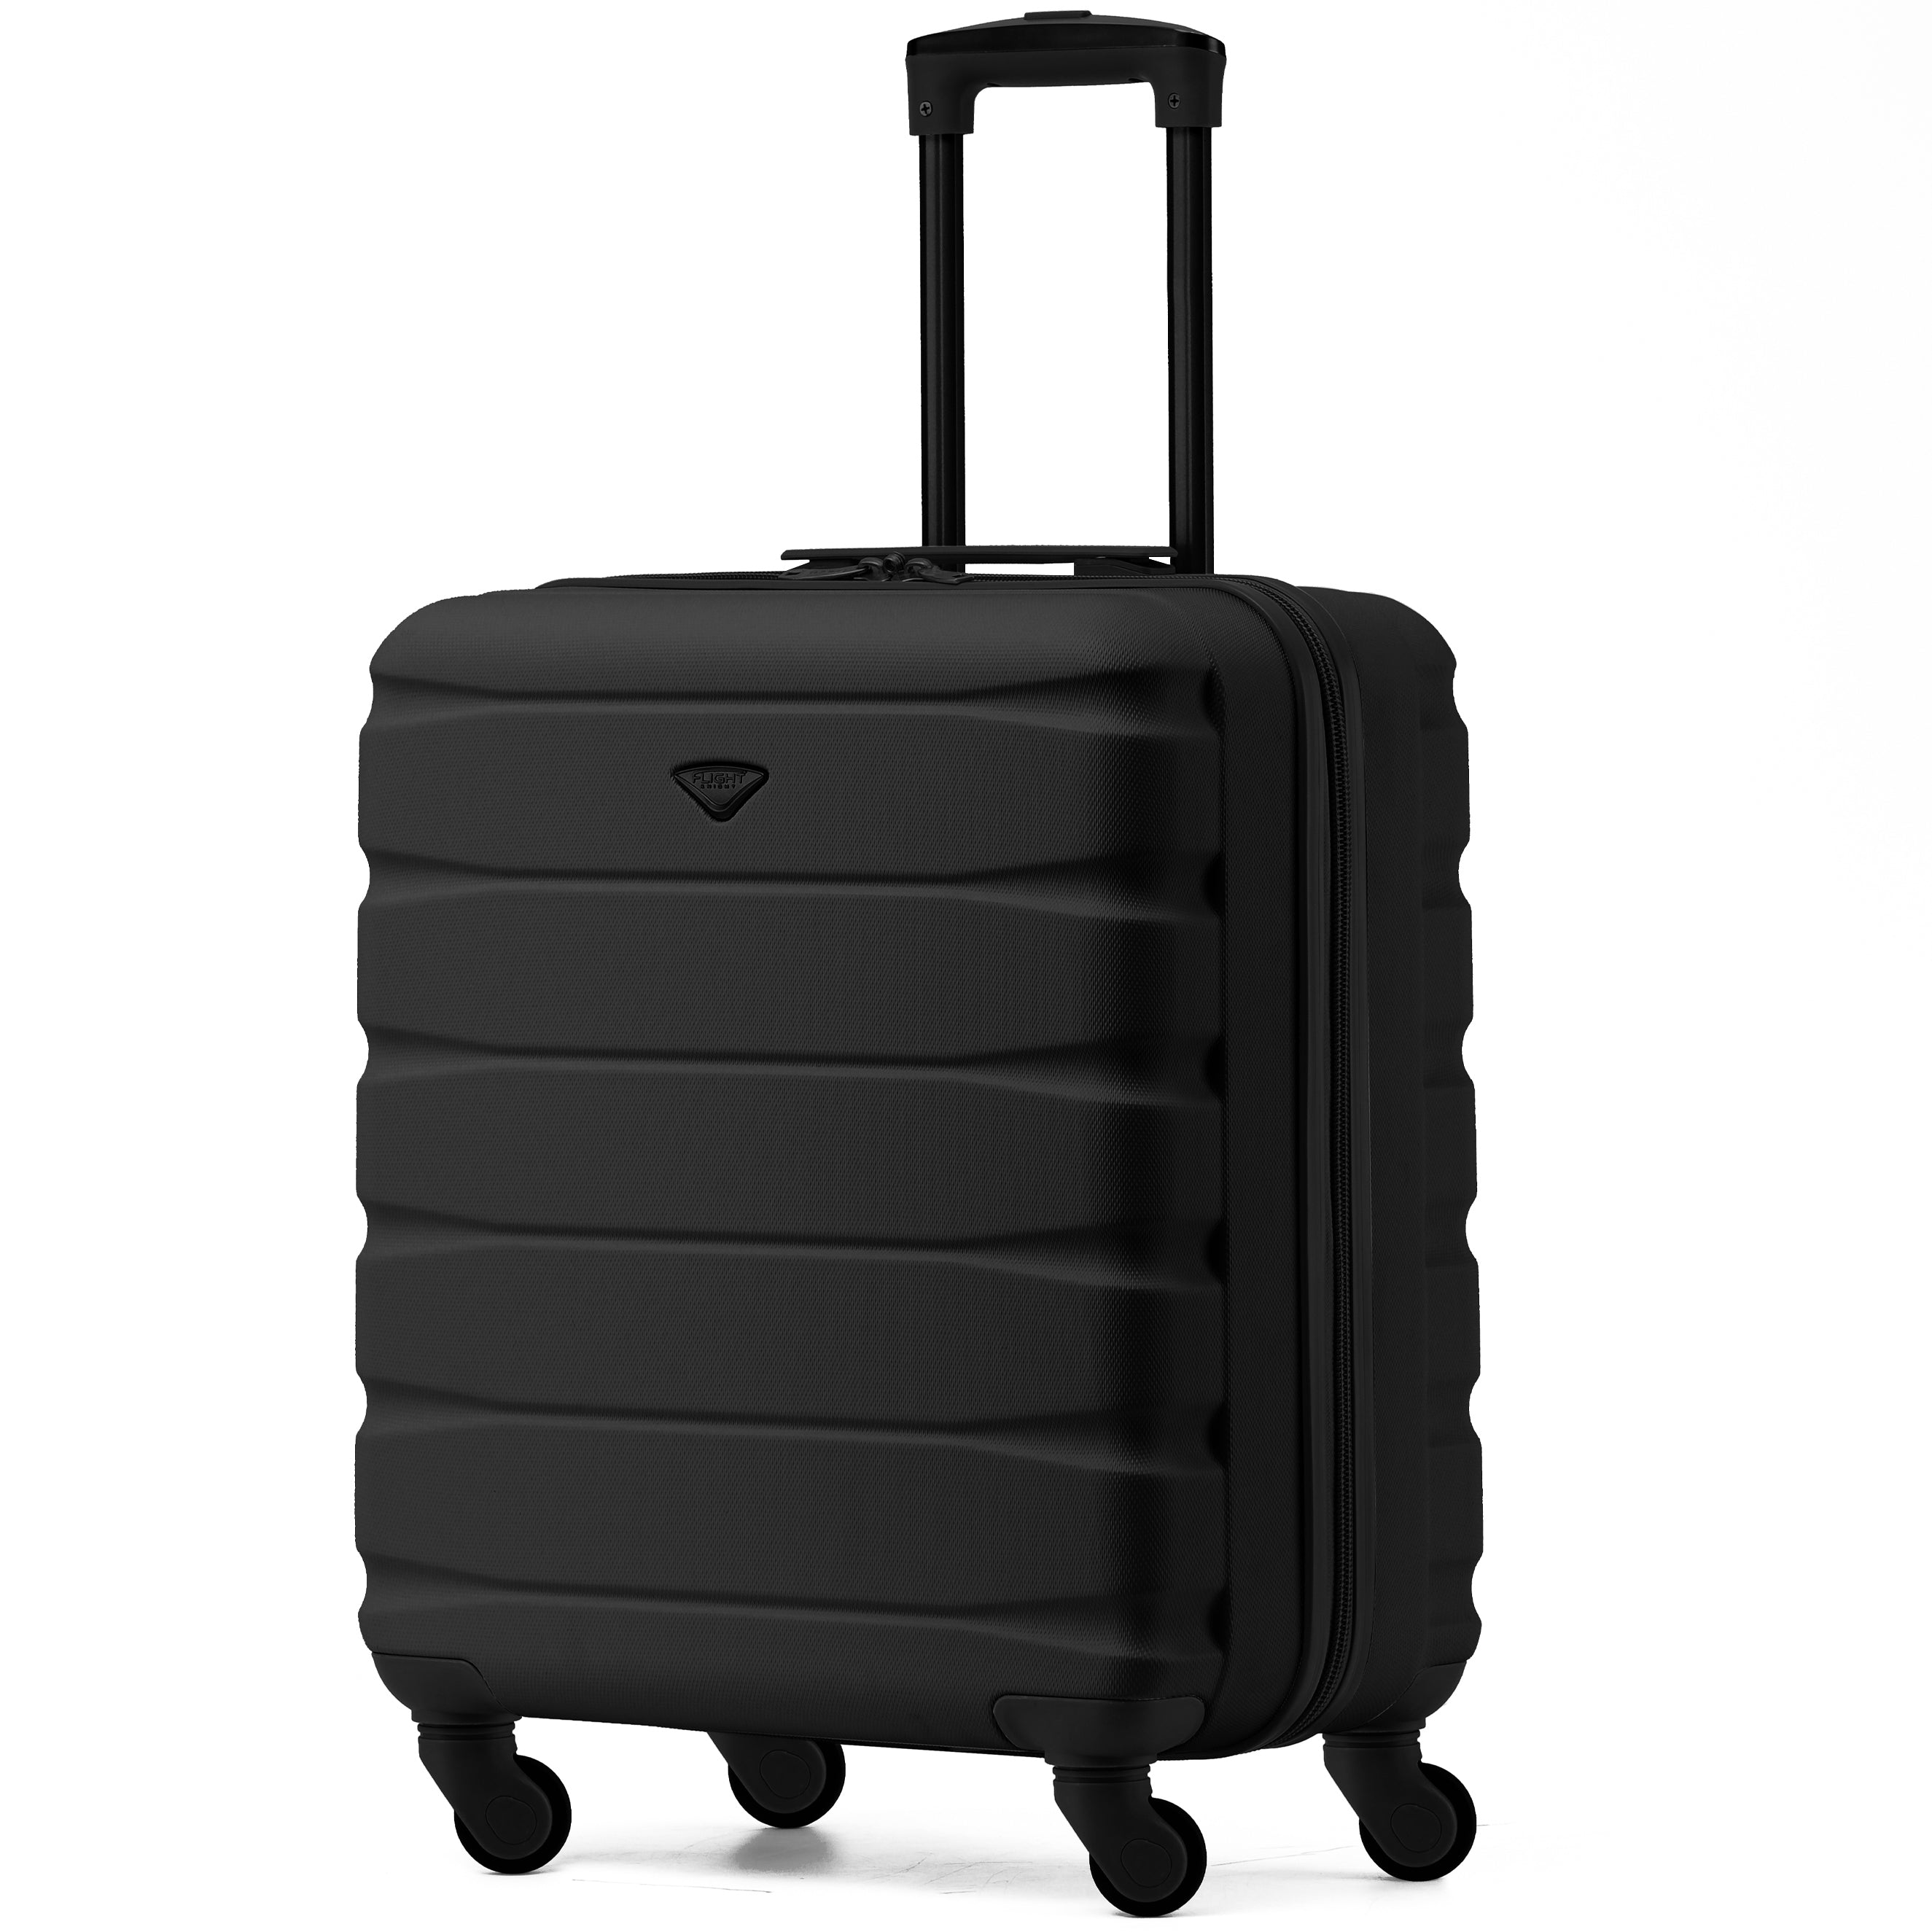 45x36x20cm easyJet Maximum Cabin Luggage  Take Maximum Luggage On Board –  Travel Luggage & Cabin Bags